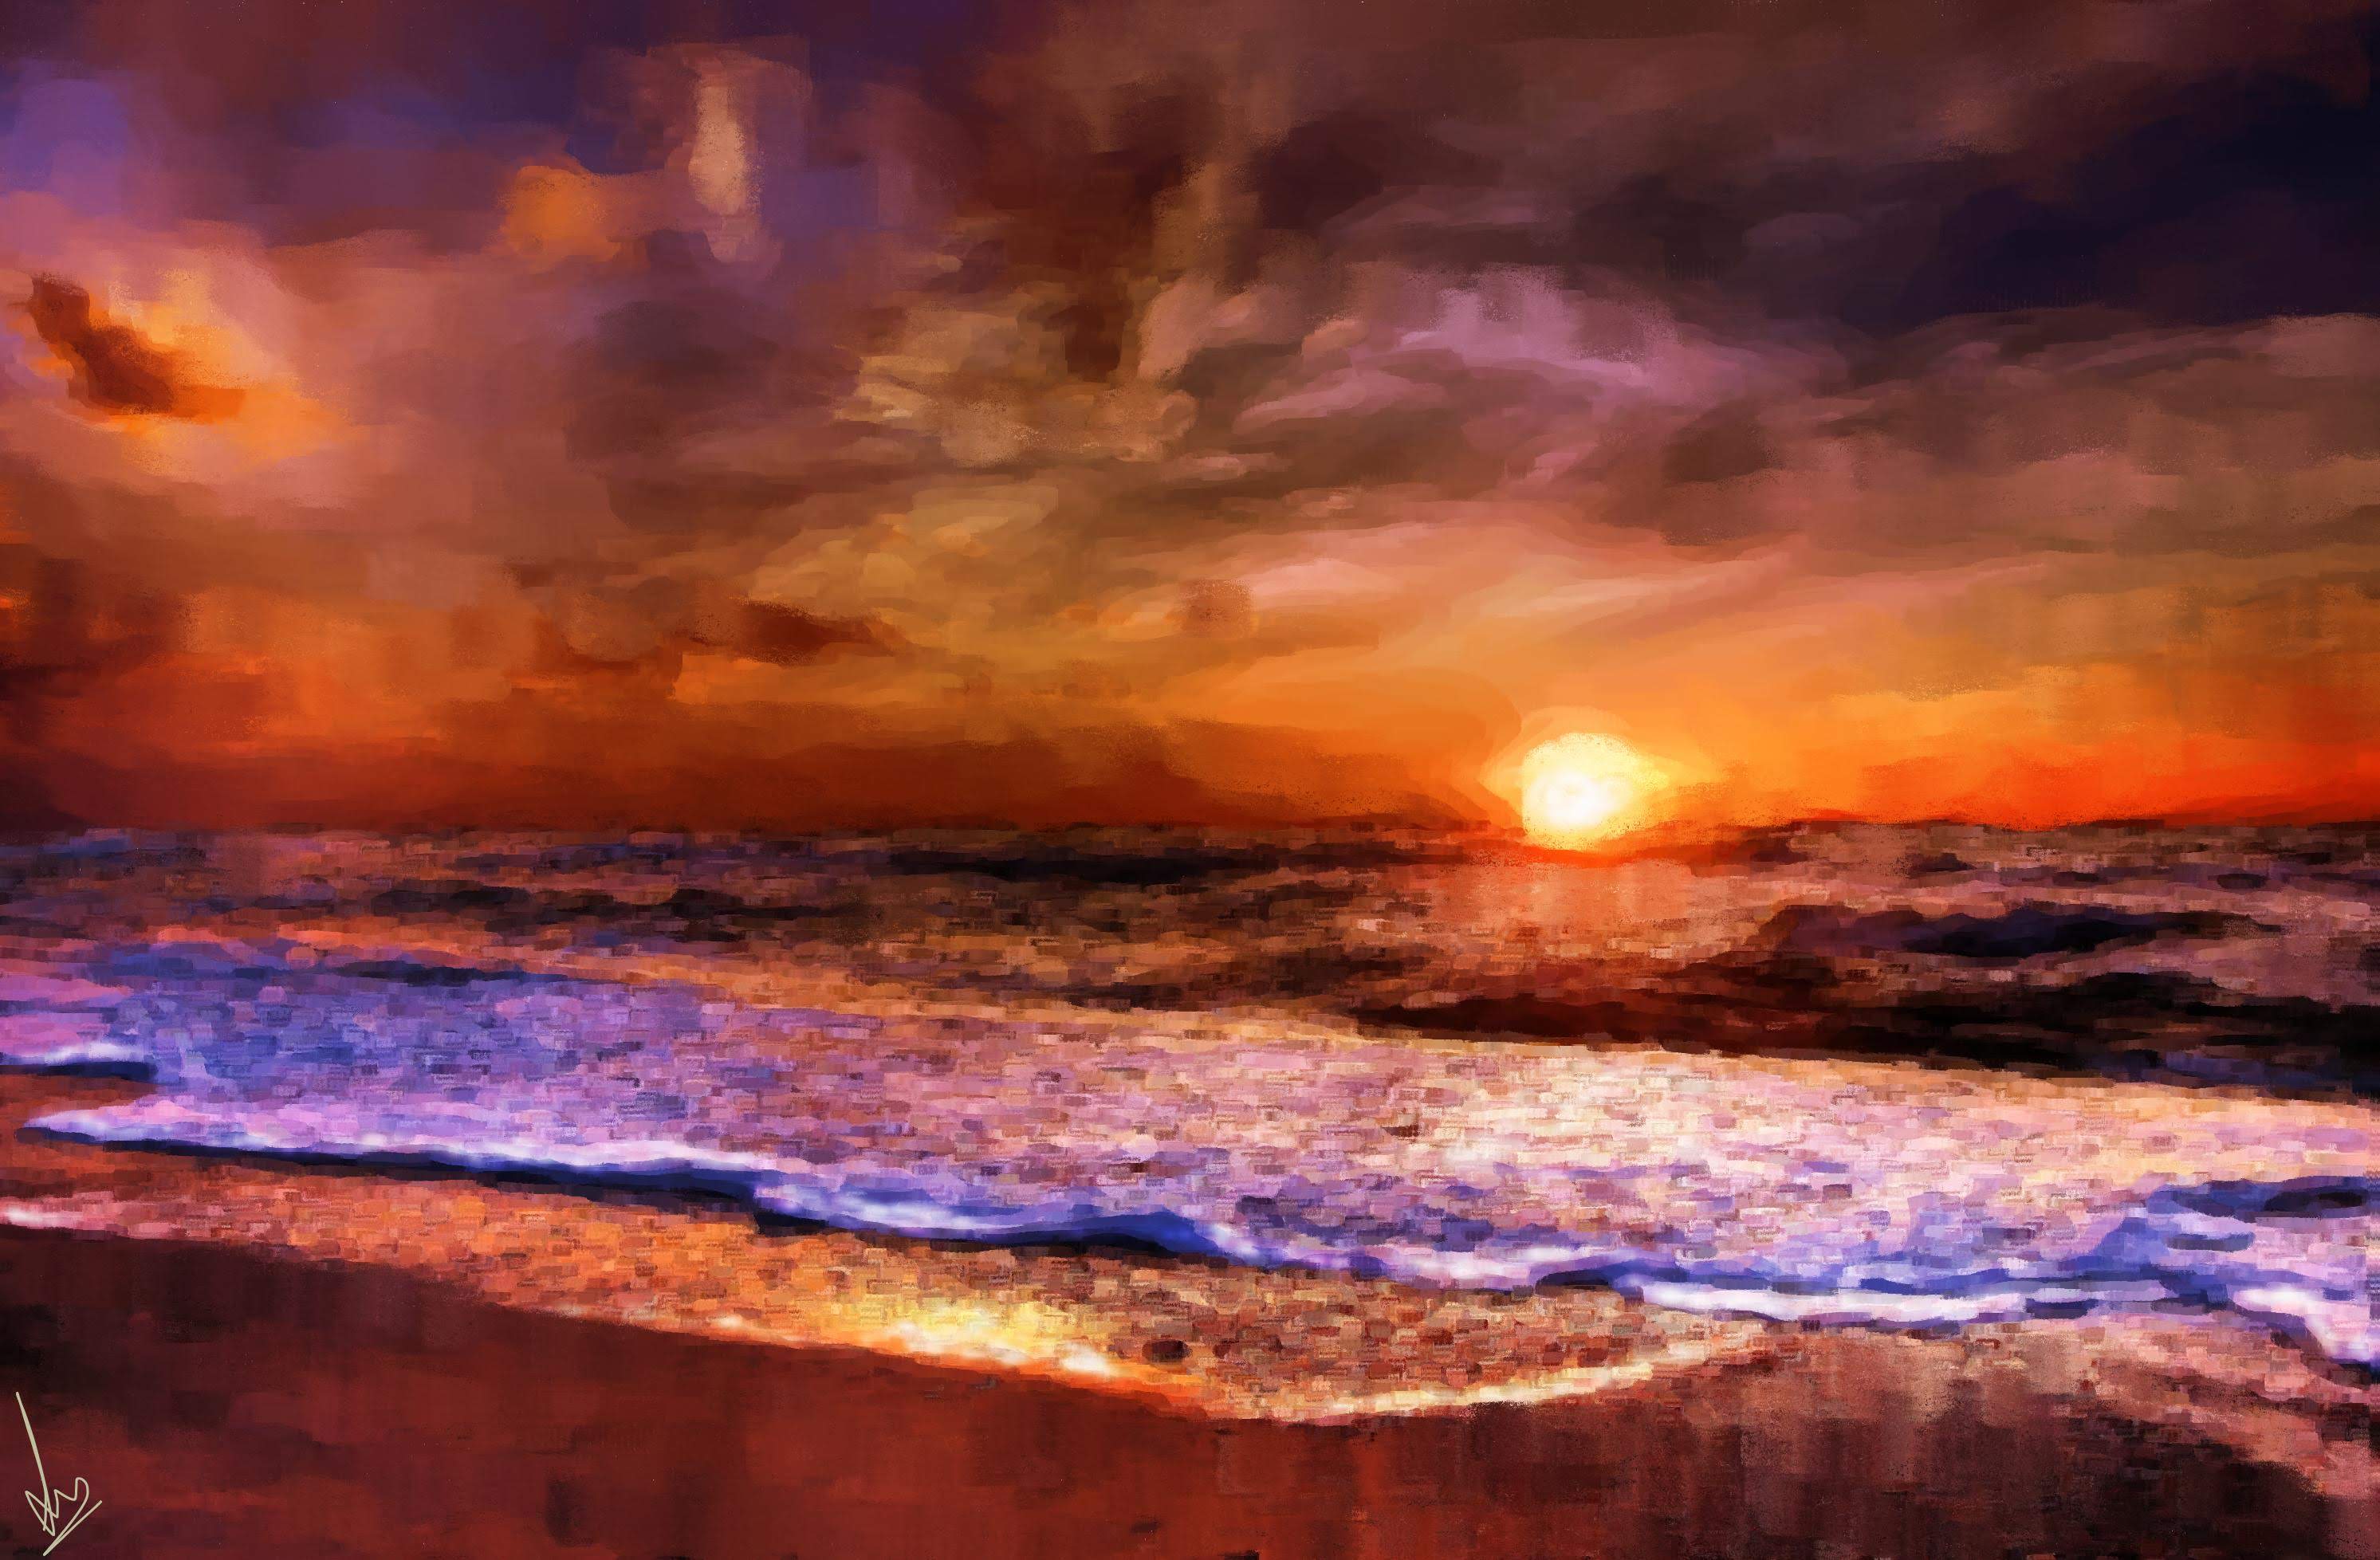 Cloudy Beach - A digital painting celebrating the beautiful beaches of Australia